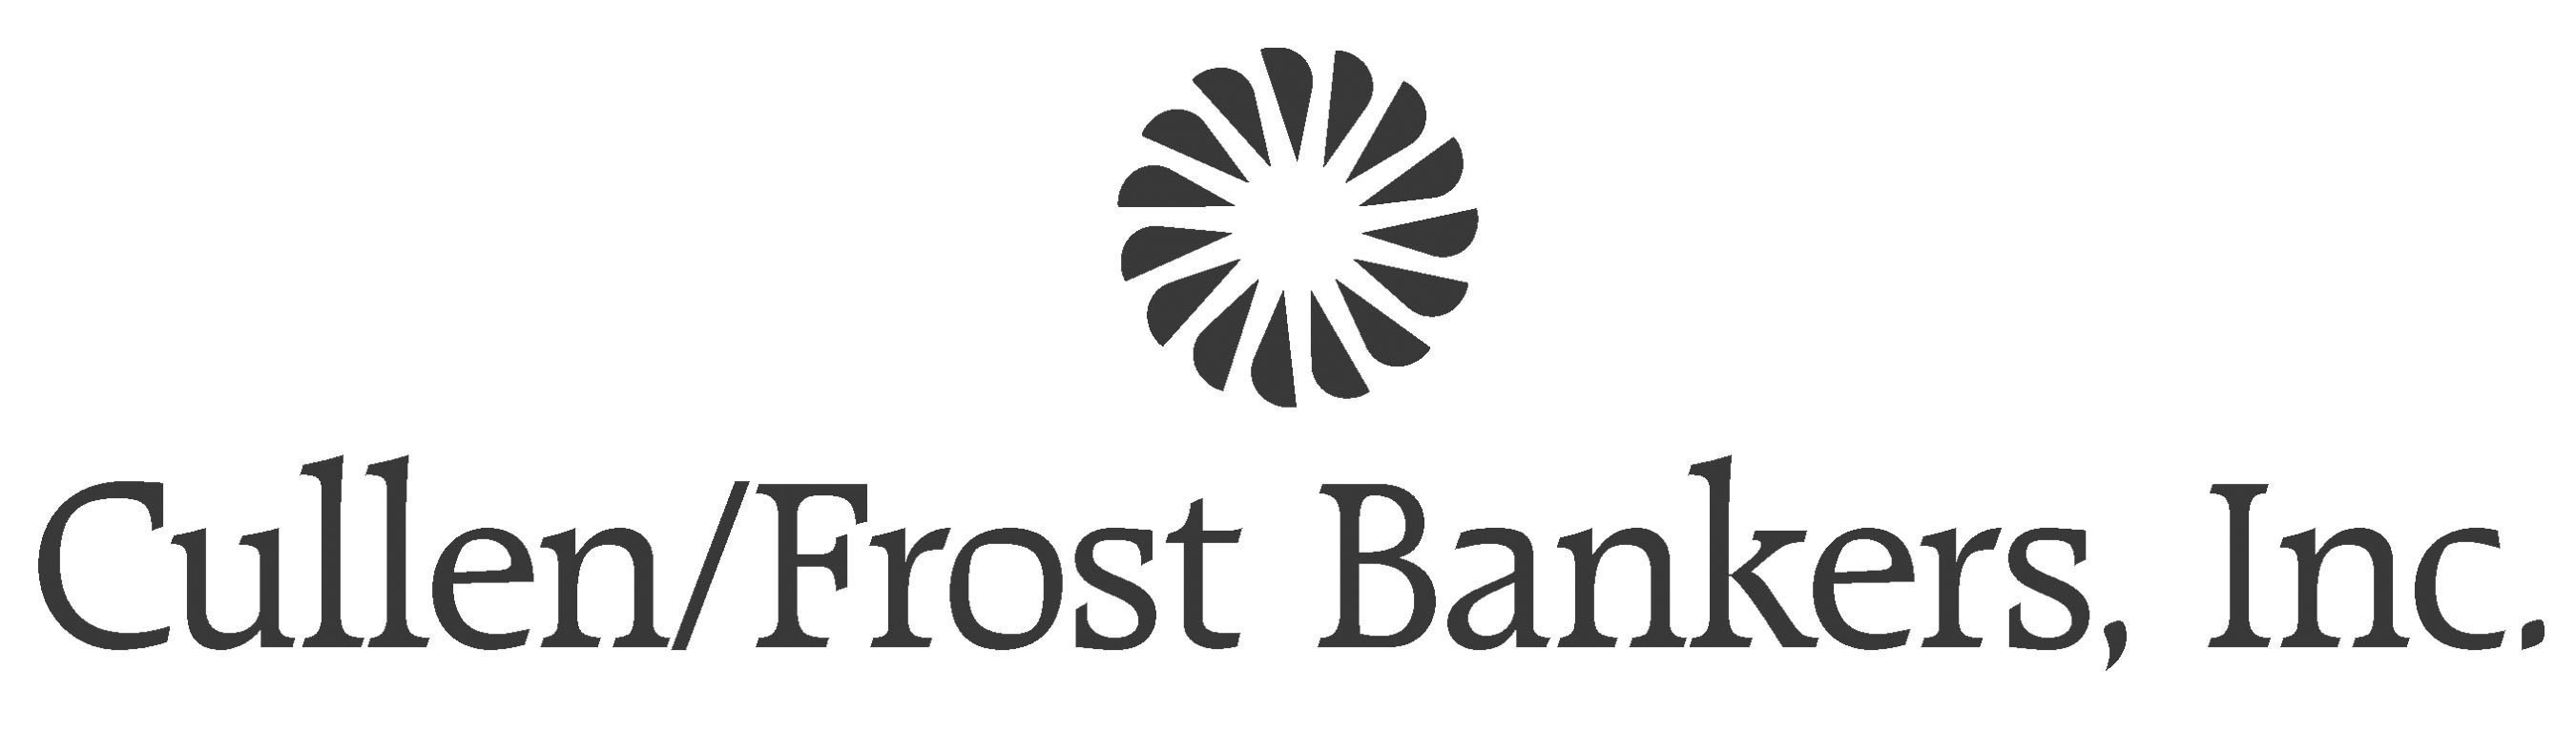 Cullen/Frost Bankers logo. (PRNewsFoto/Cullen/Frost Bankers)